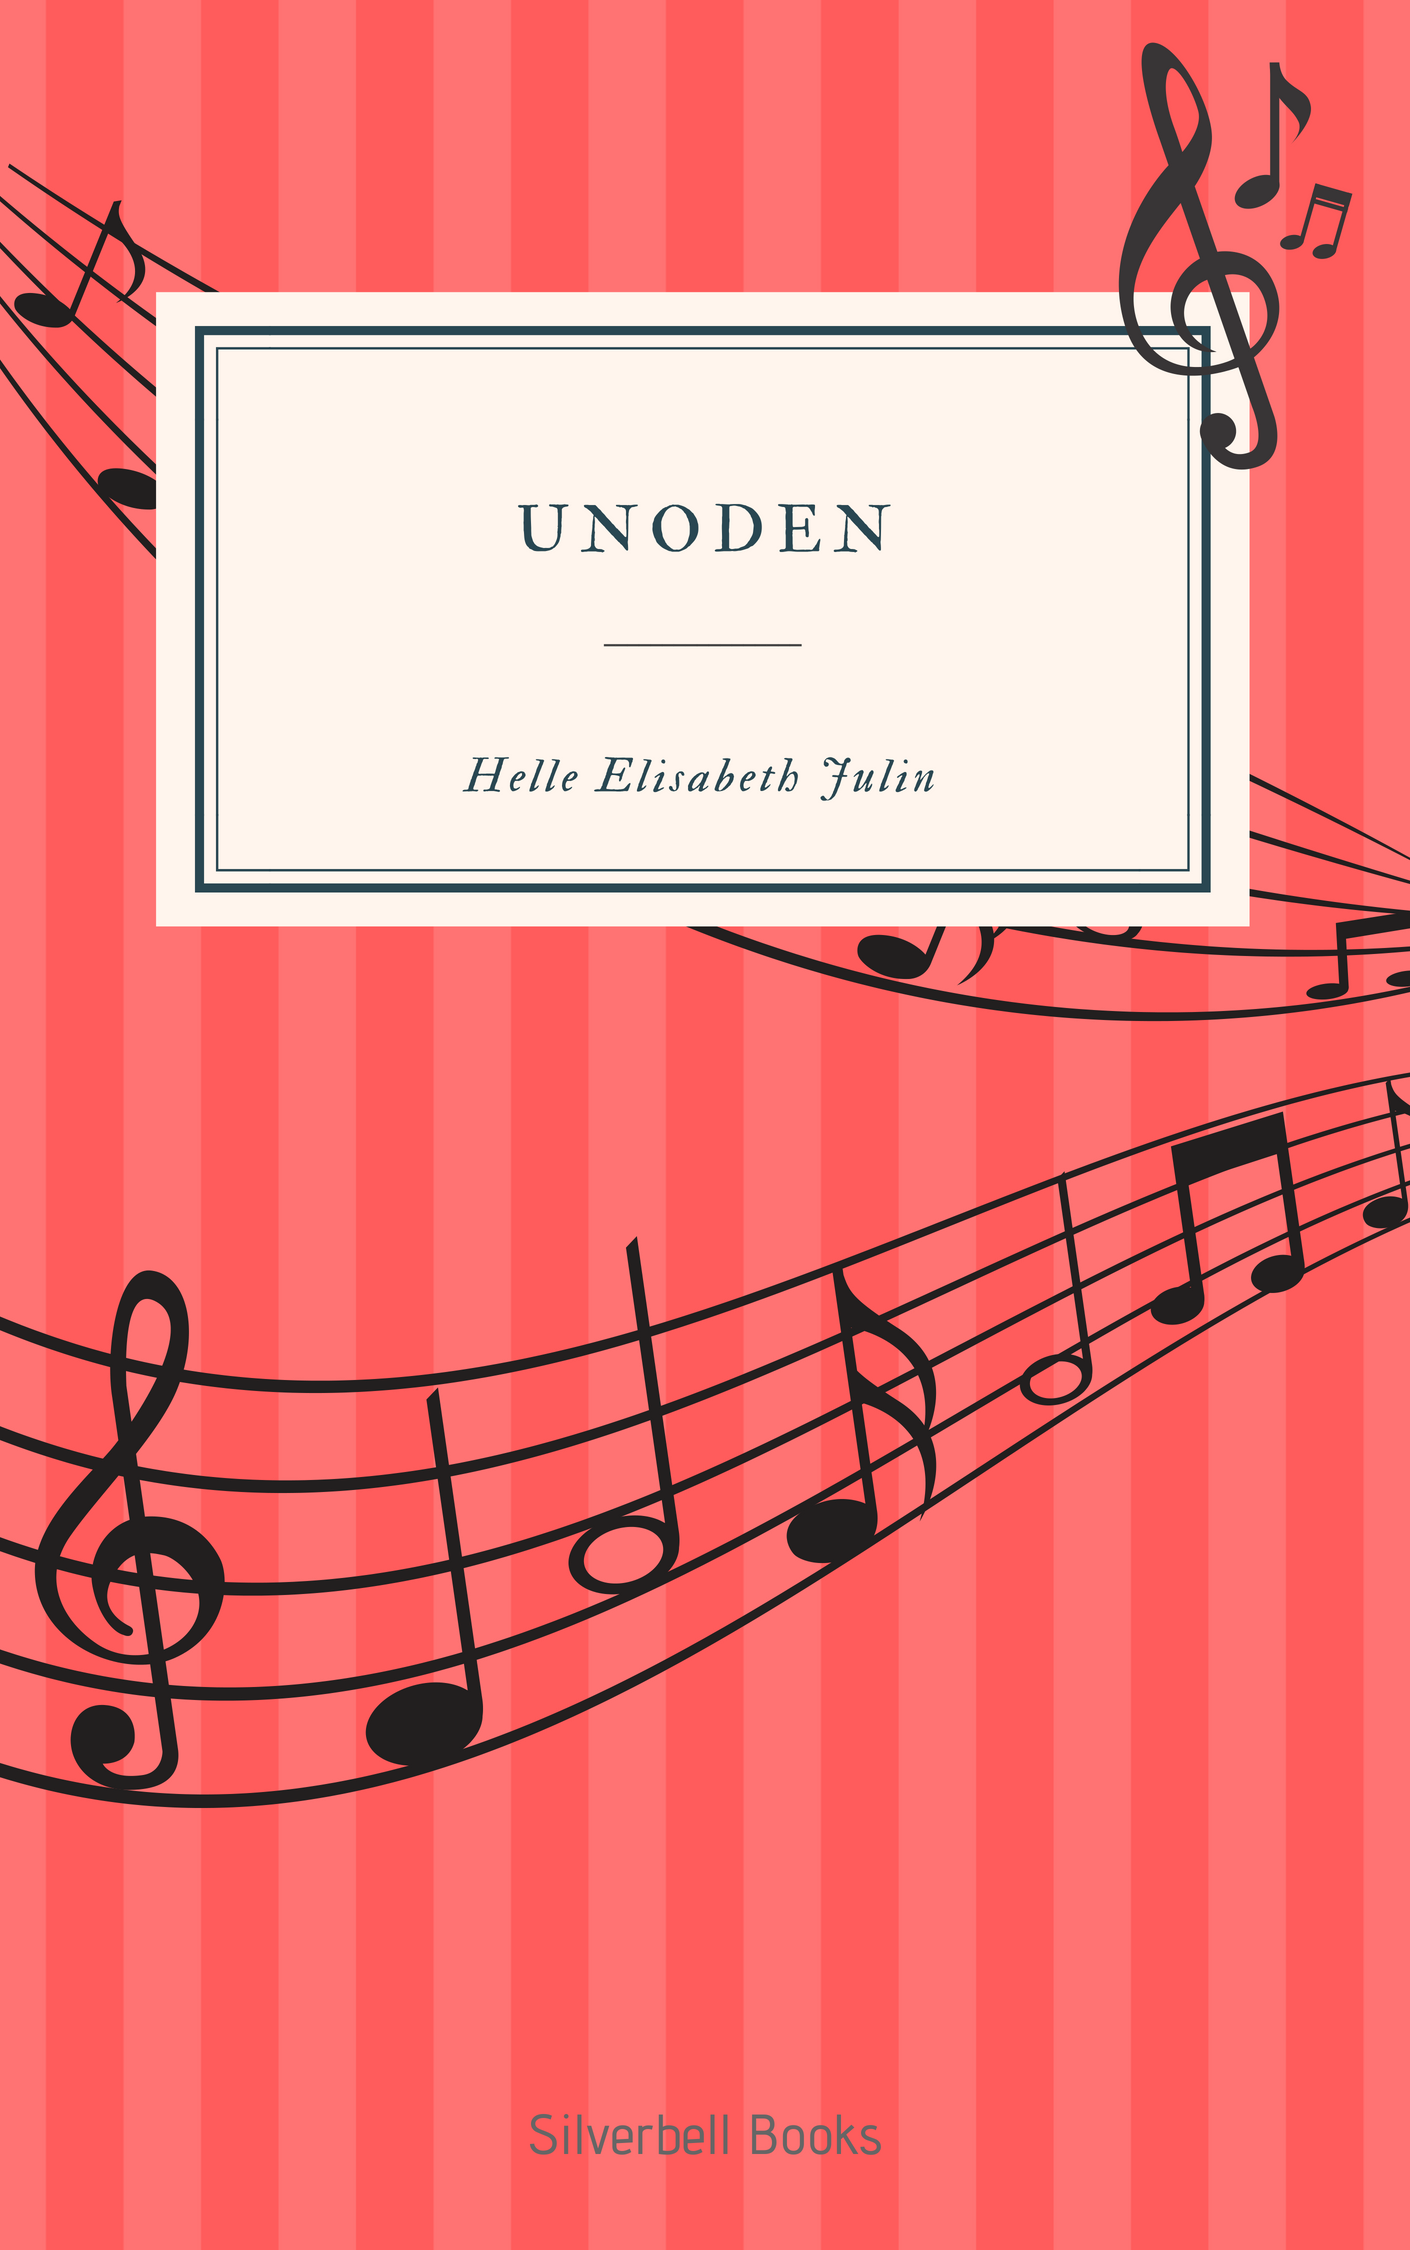 Copy of Unoden